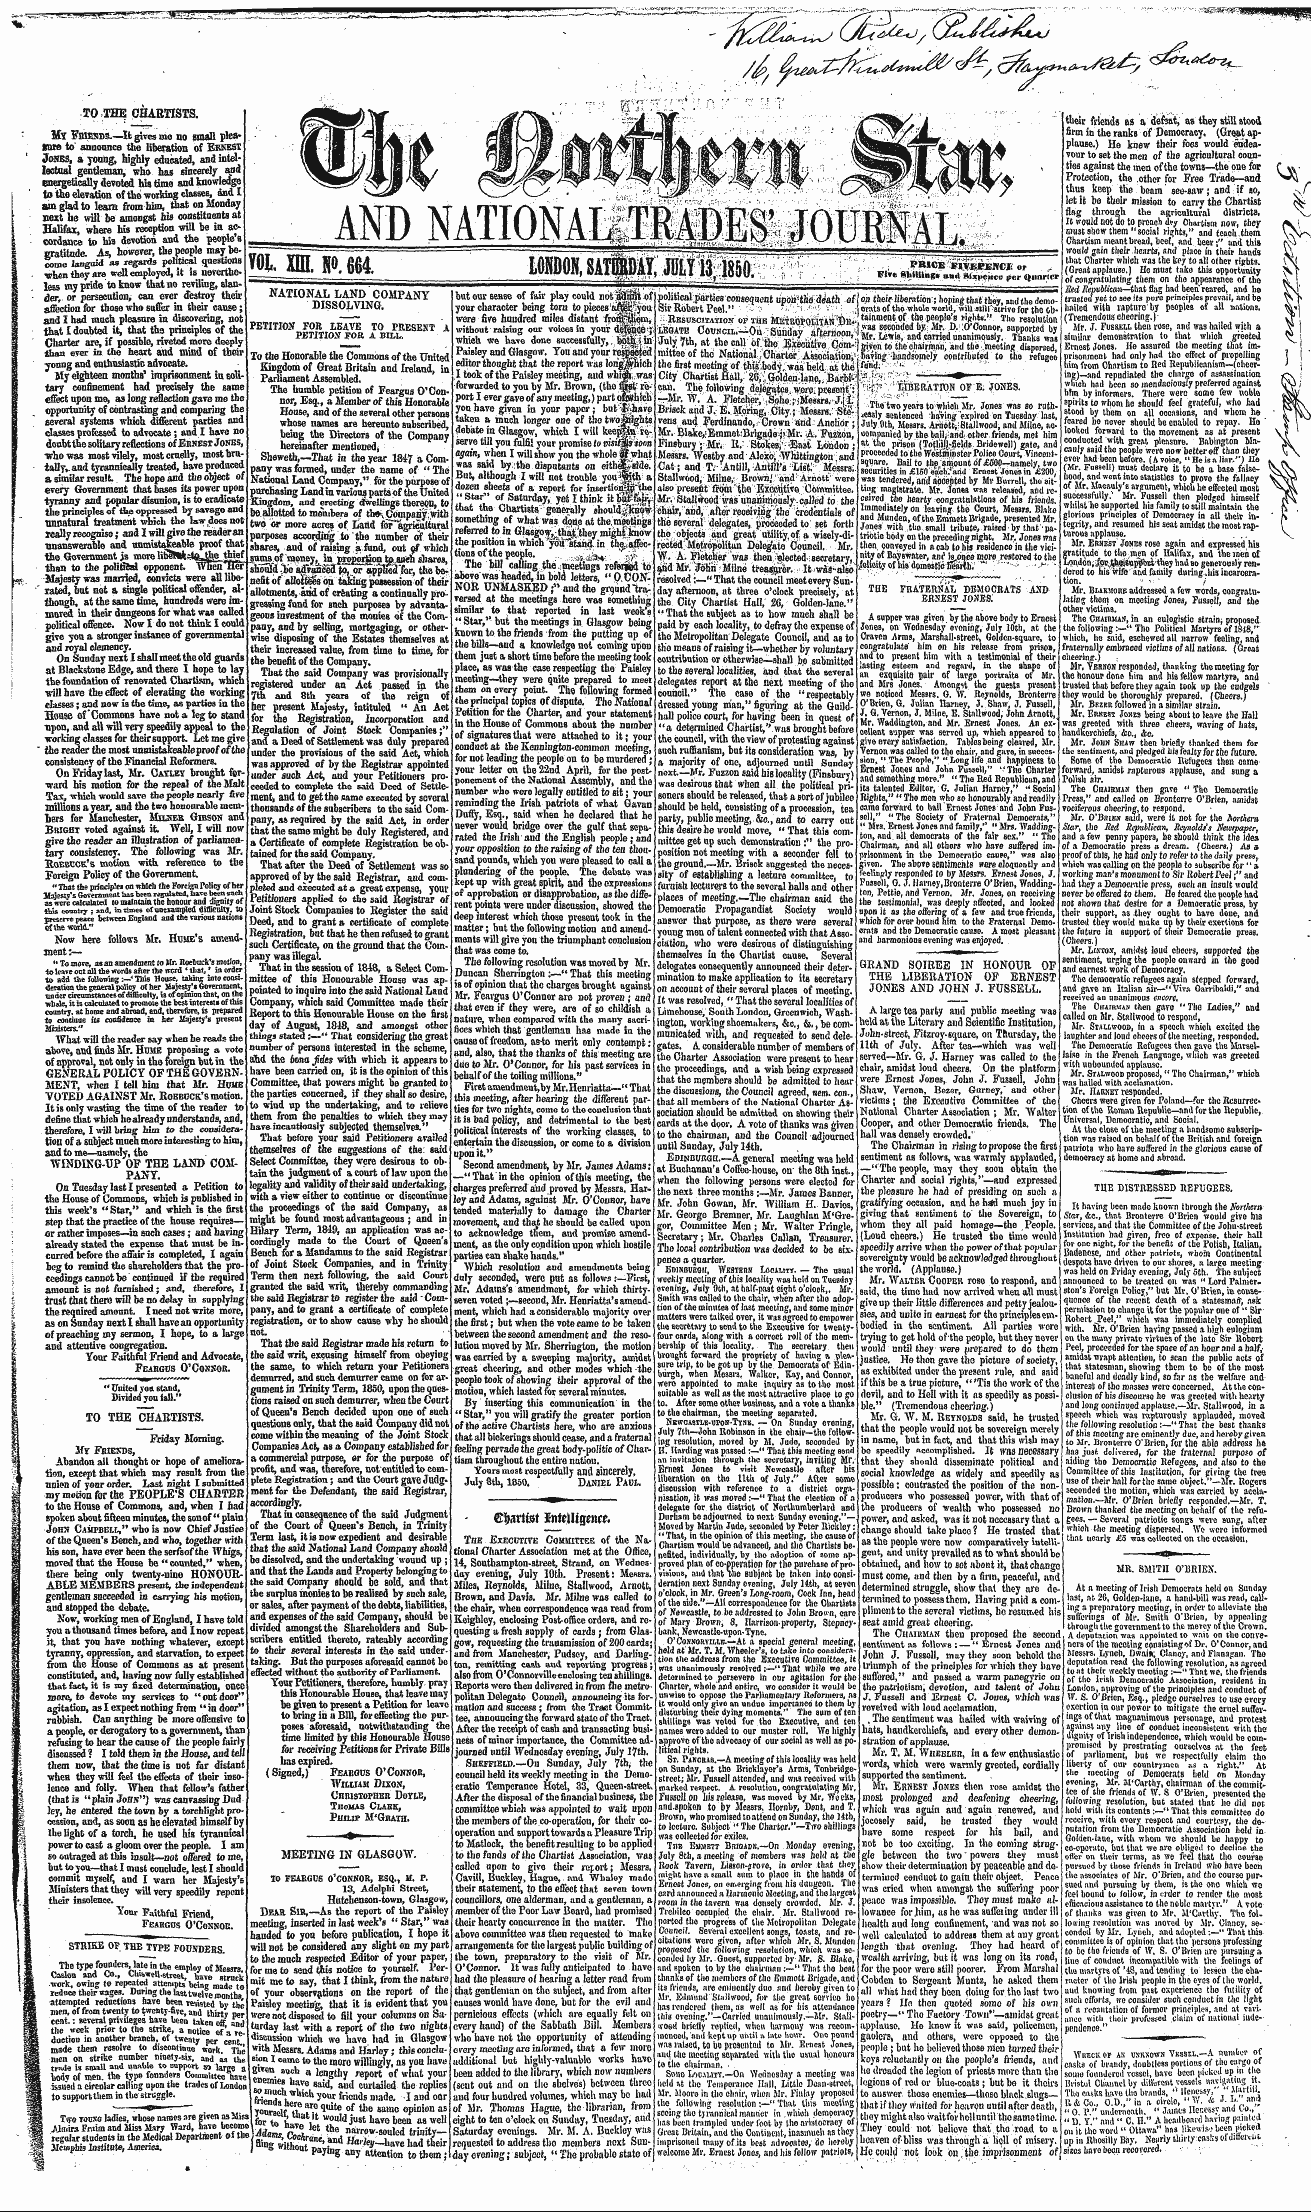 Northern Star (1837-1852): jS F Y, 3rd edition - And Nationaljiiillgobliai^ :